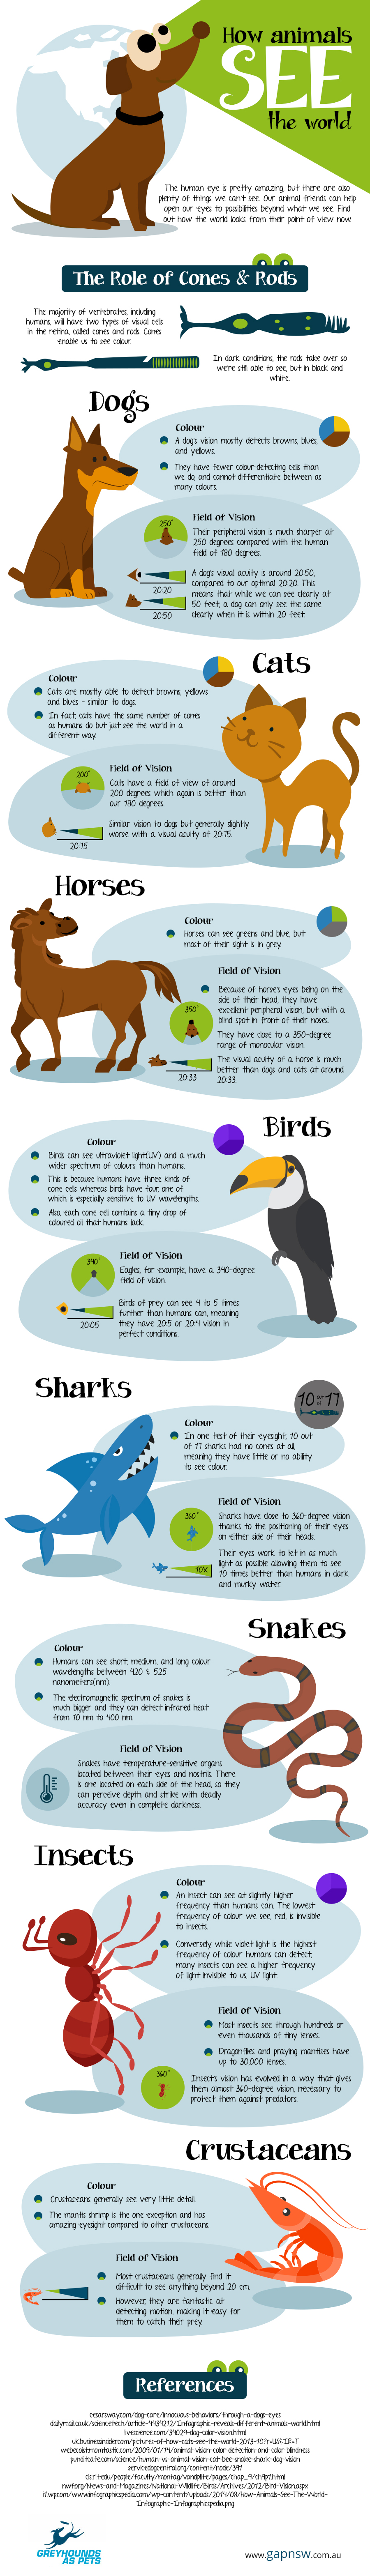 Animal Sight Infographic